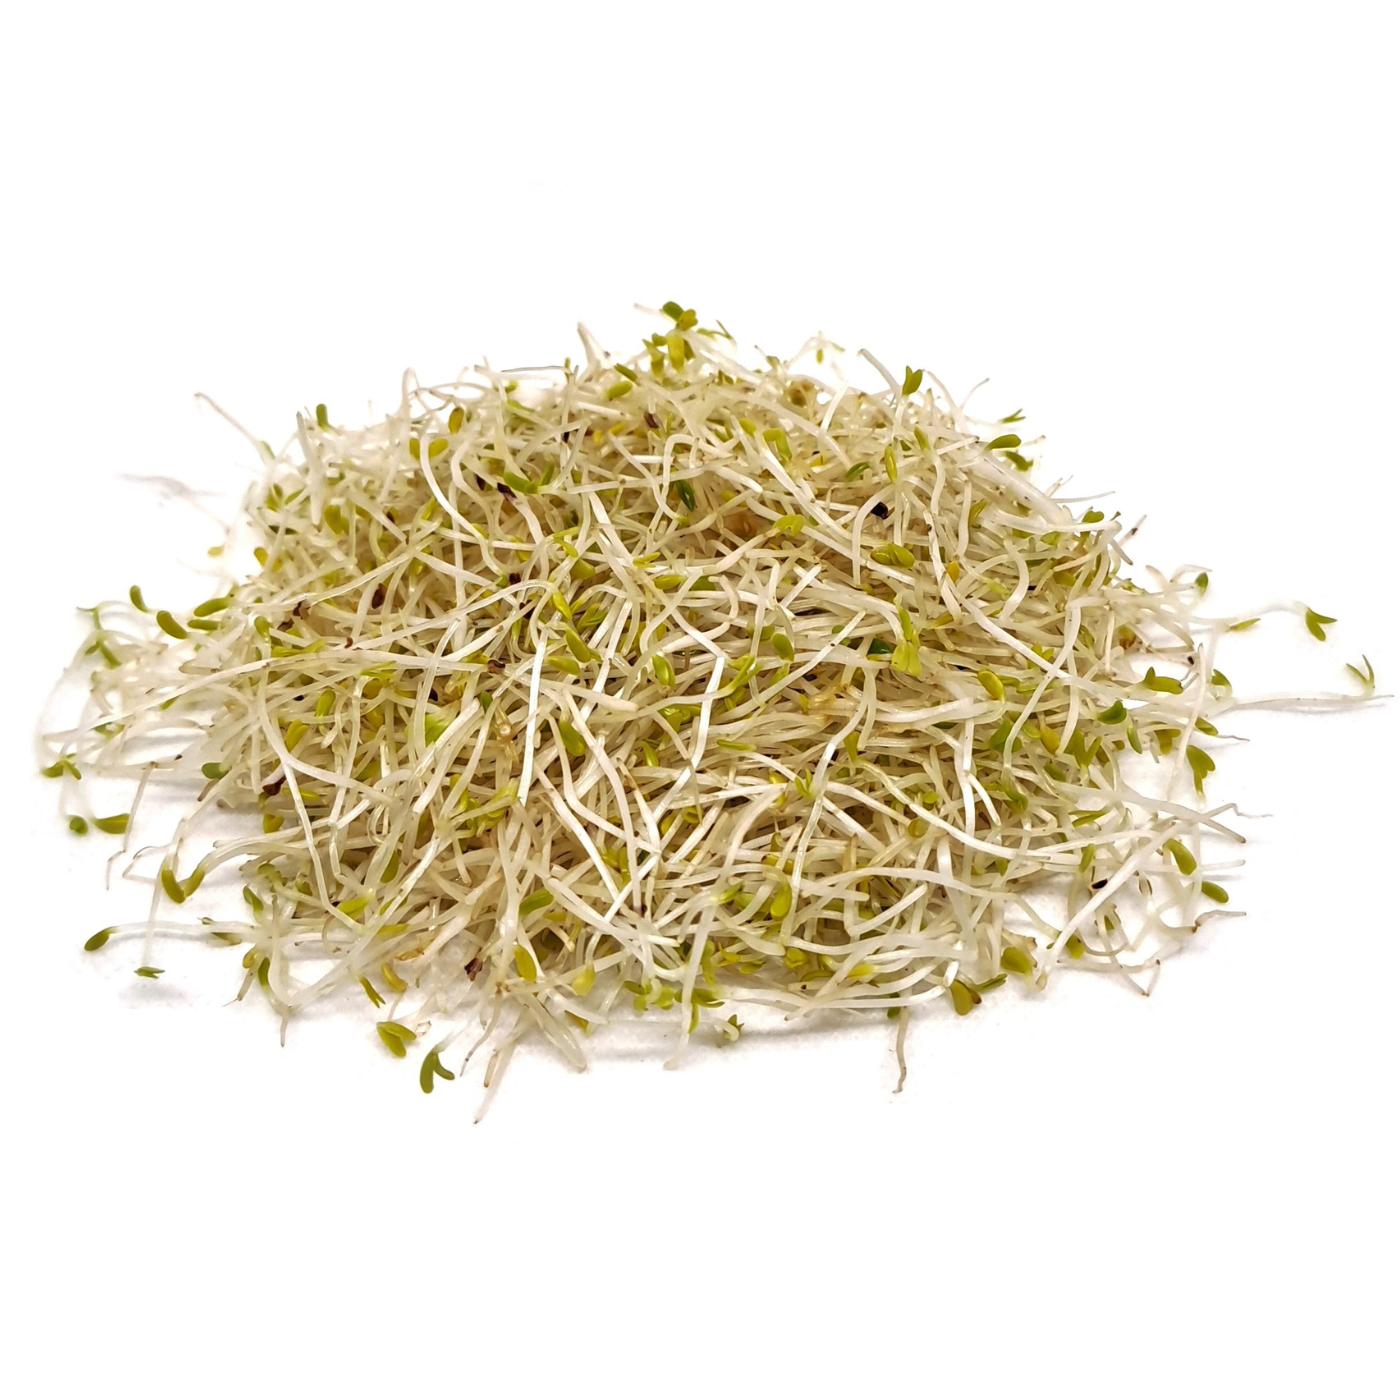 Organic Alfalfa sprouts